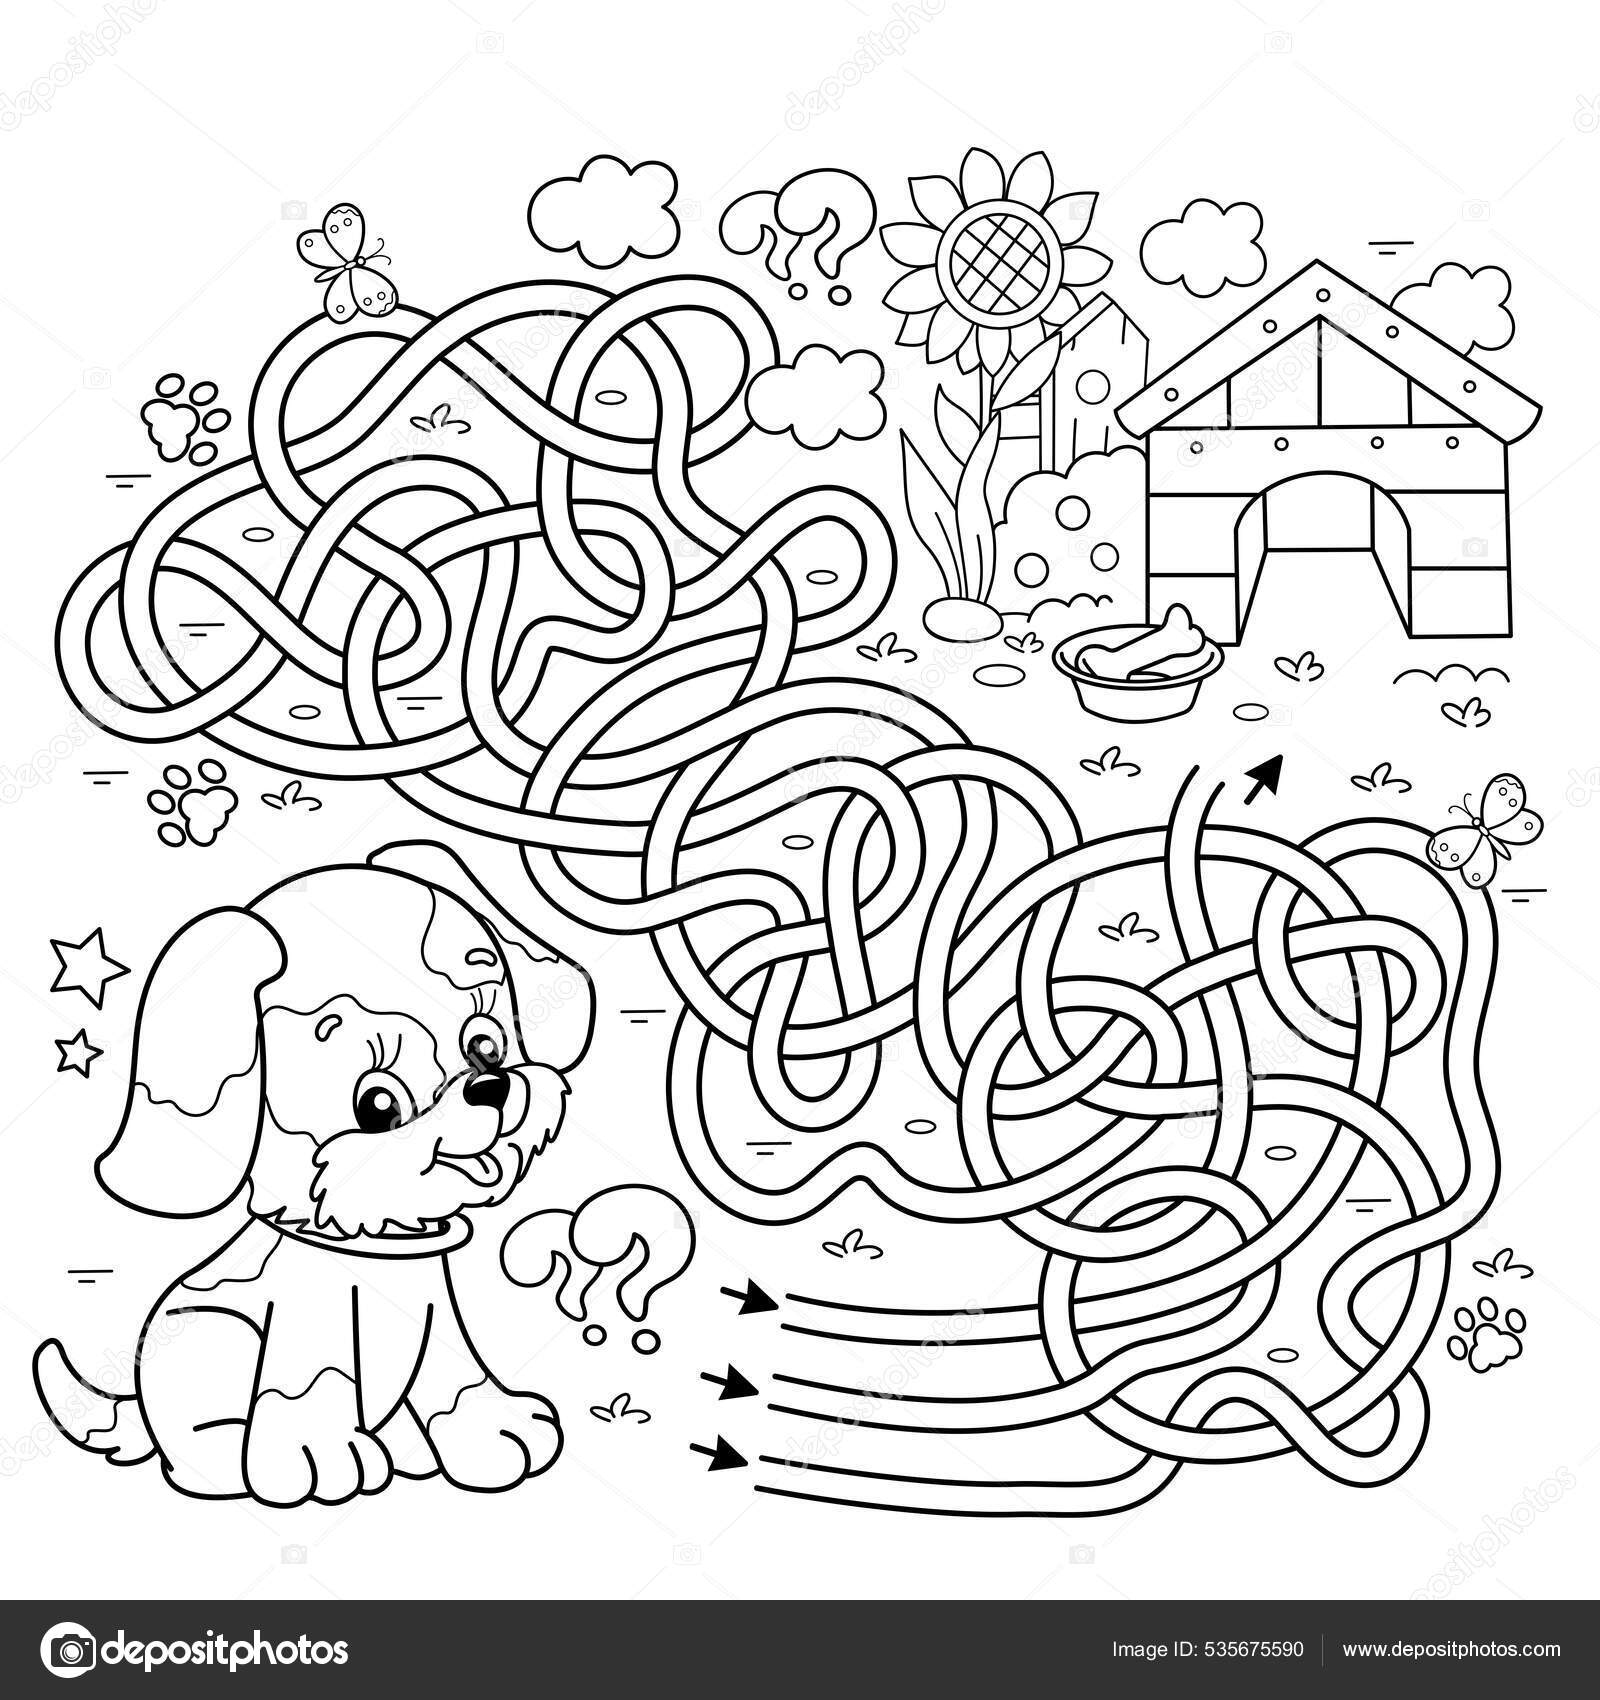 https://st.depositphotos.com/5722118/53567/v/1600/depositphotos_535675590-stock-illustration-maze-labyrinth-game-puzzle-tangled.jpg